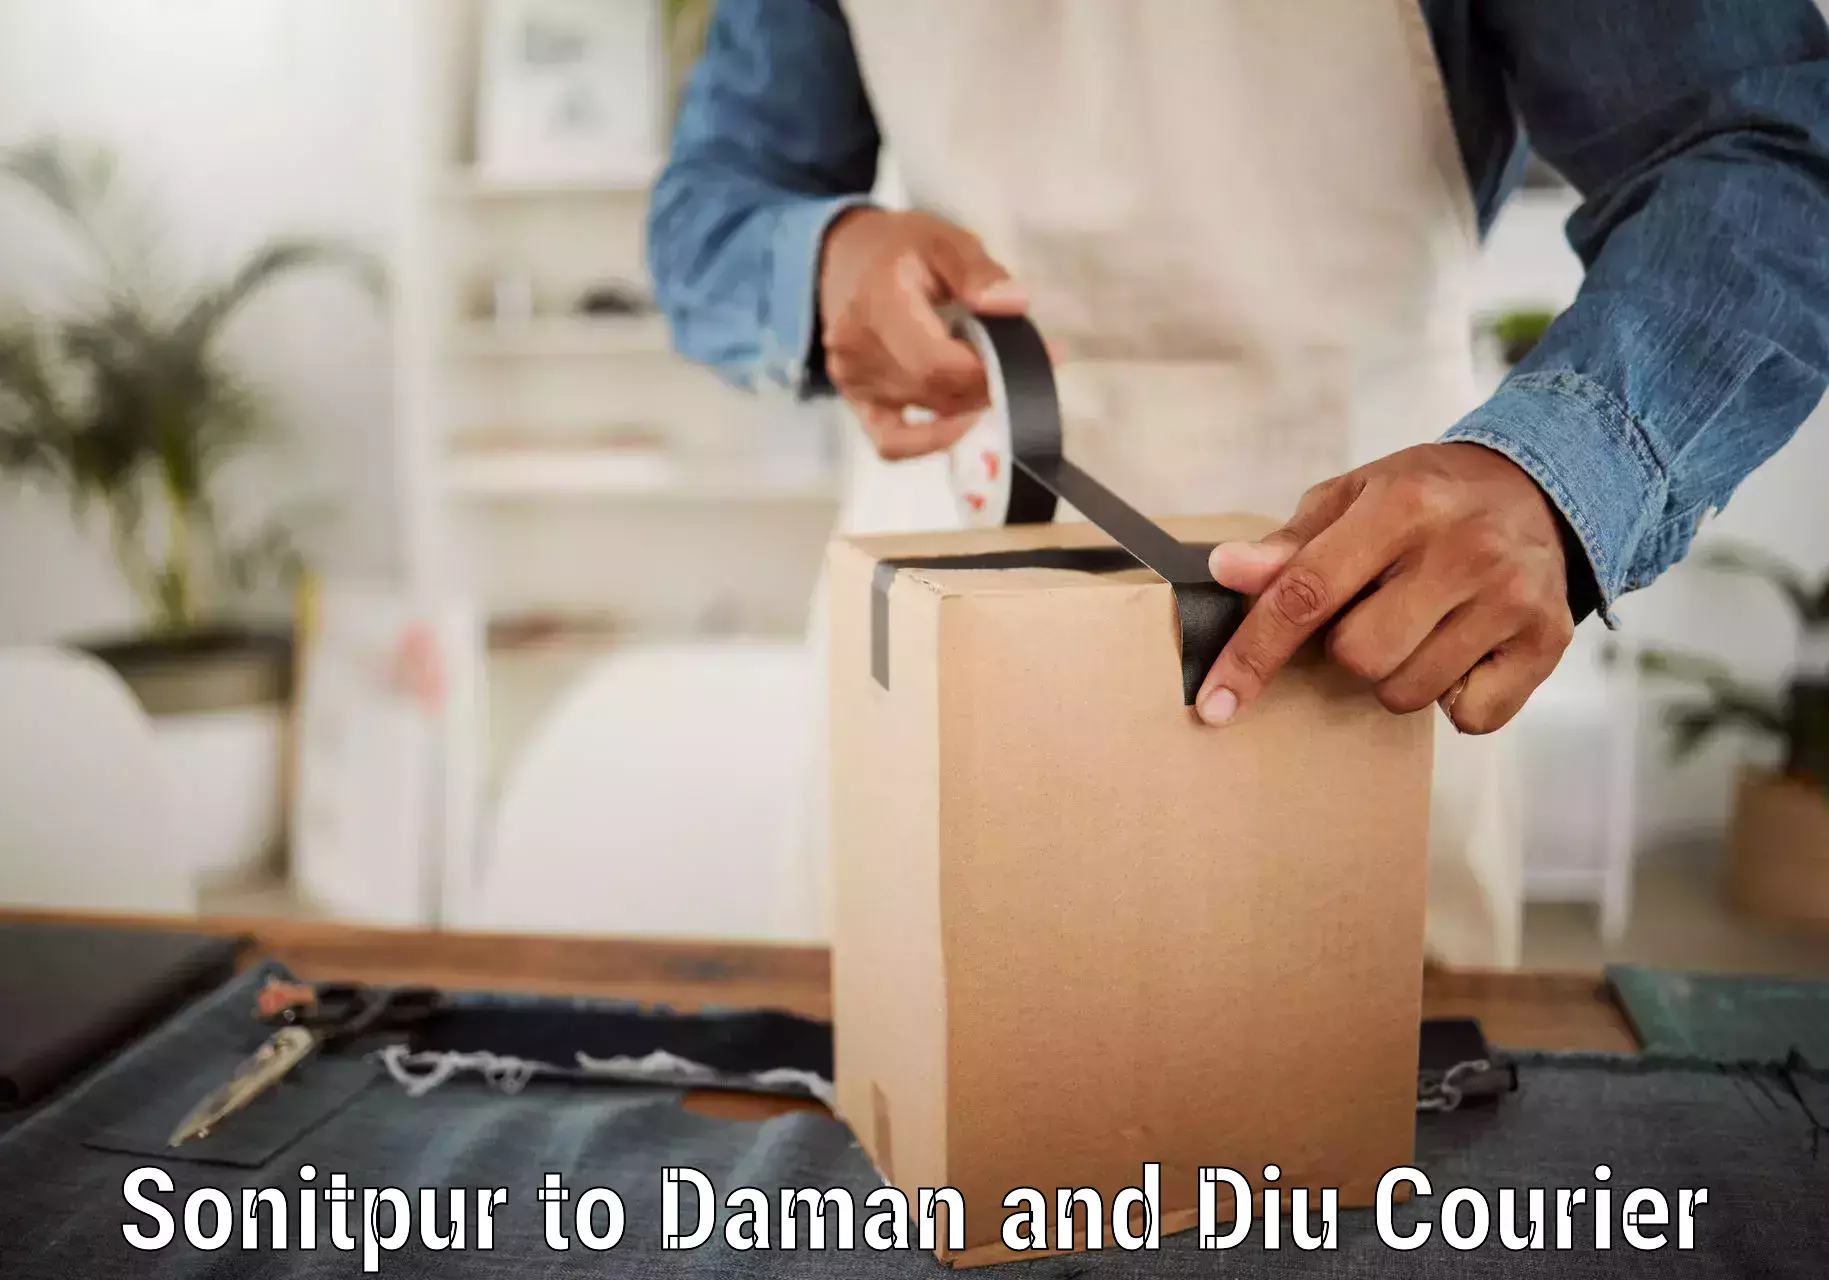 Courier service comparison Sonitpur to Diu